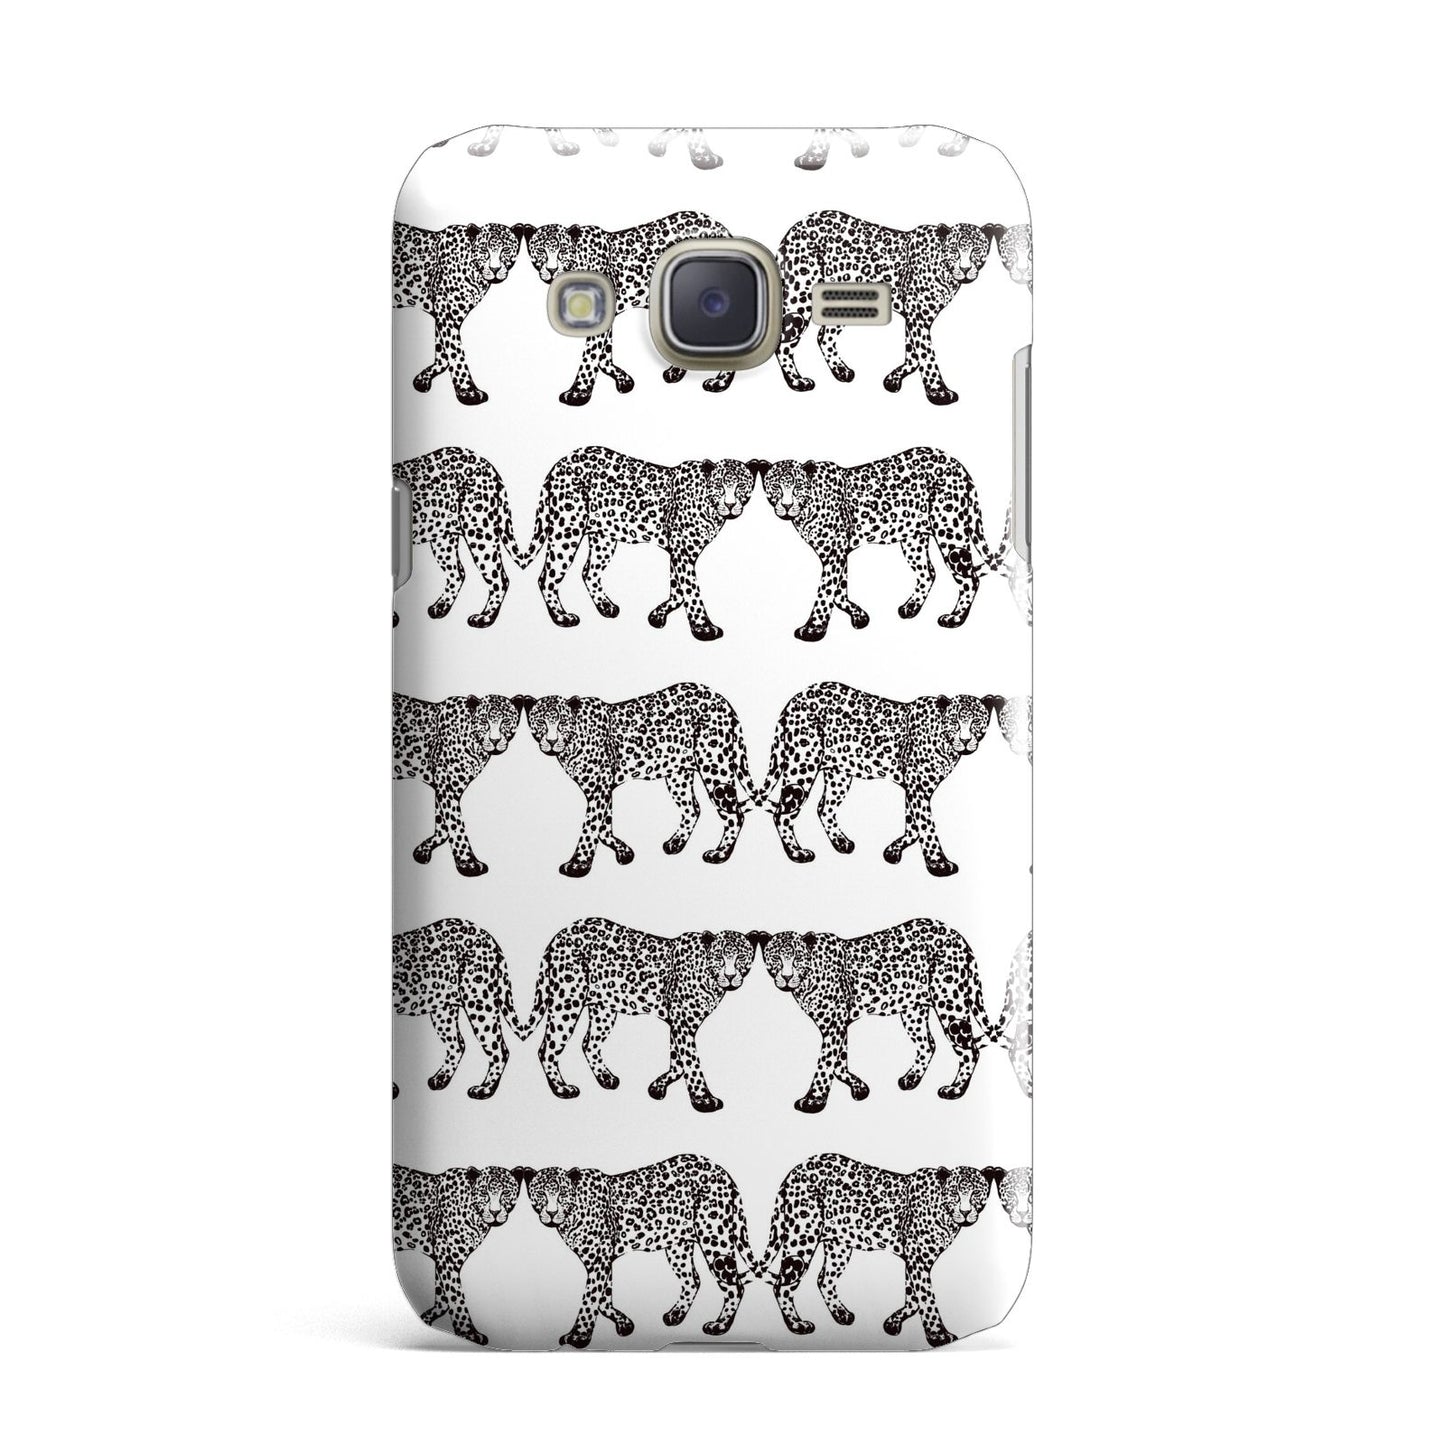 Monochrome Mirrored Leopard Print Samsung Galaxy J7 Case